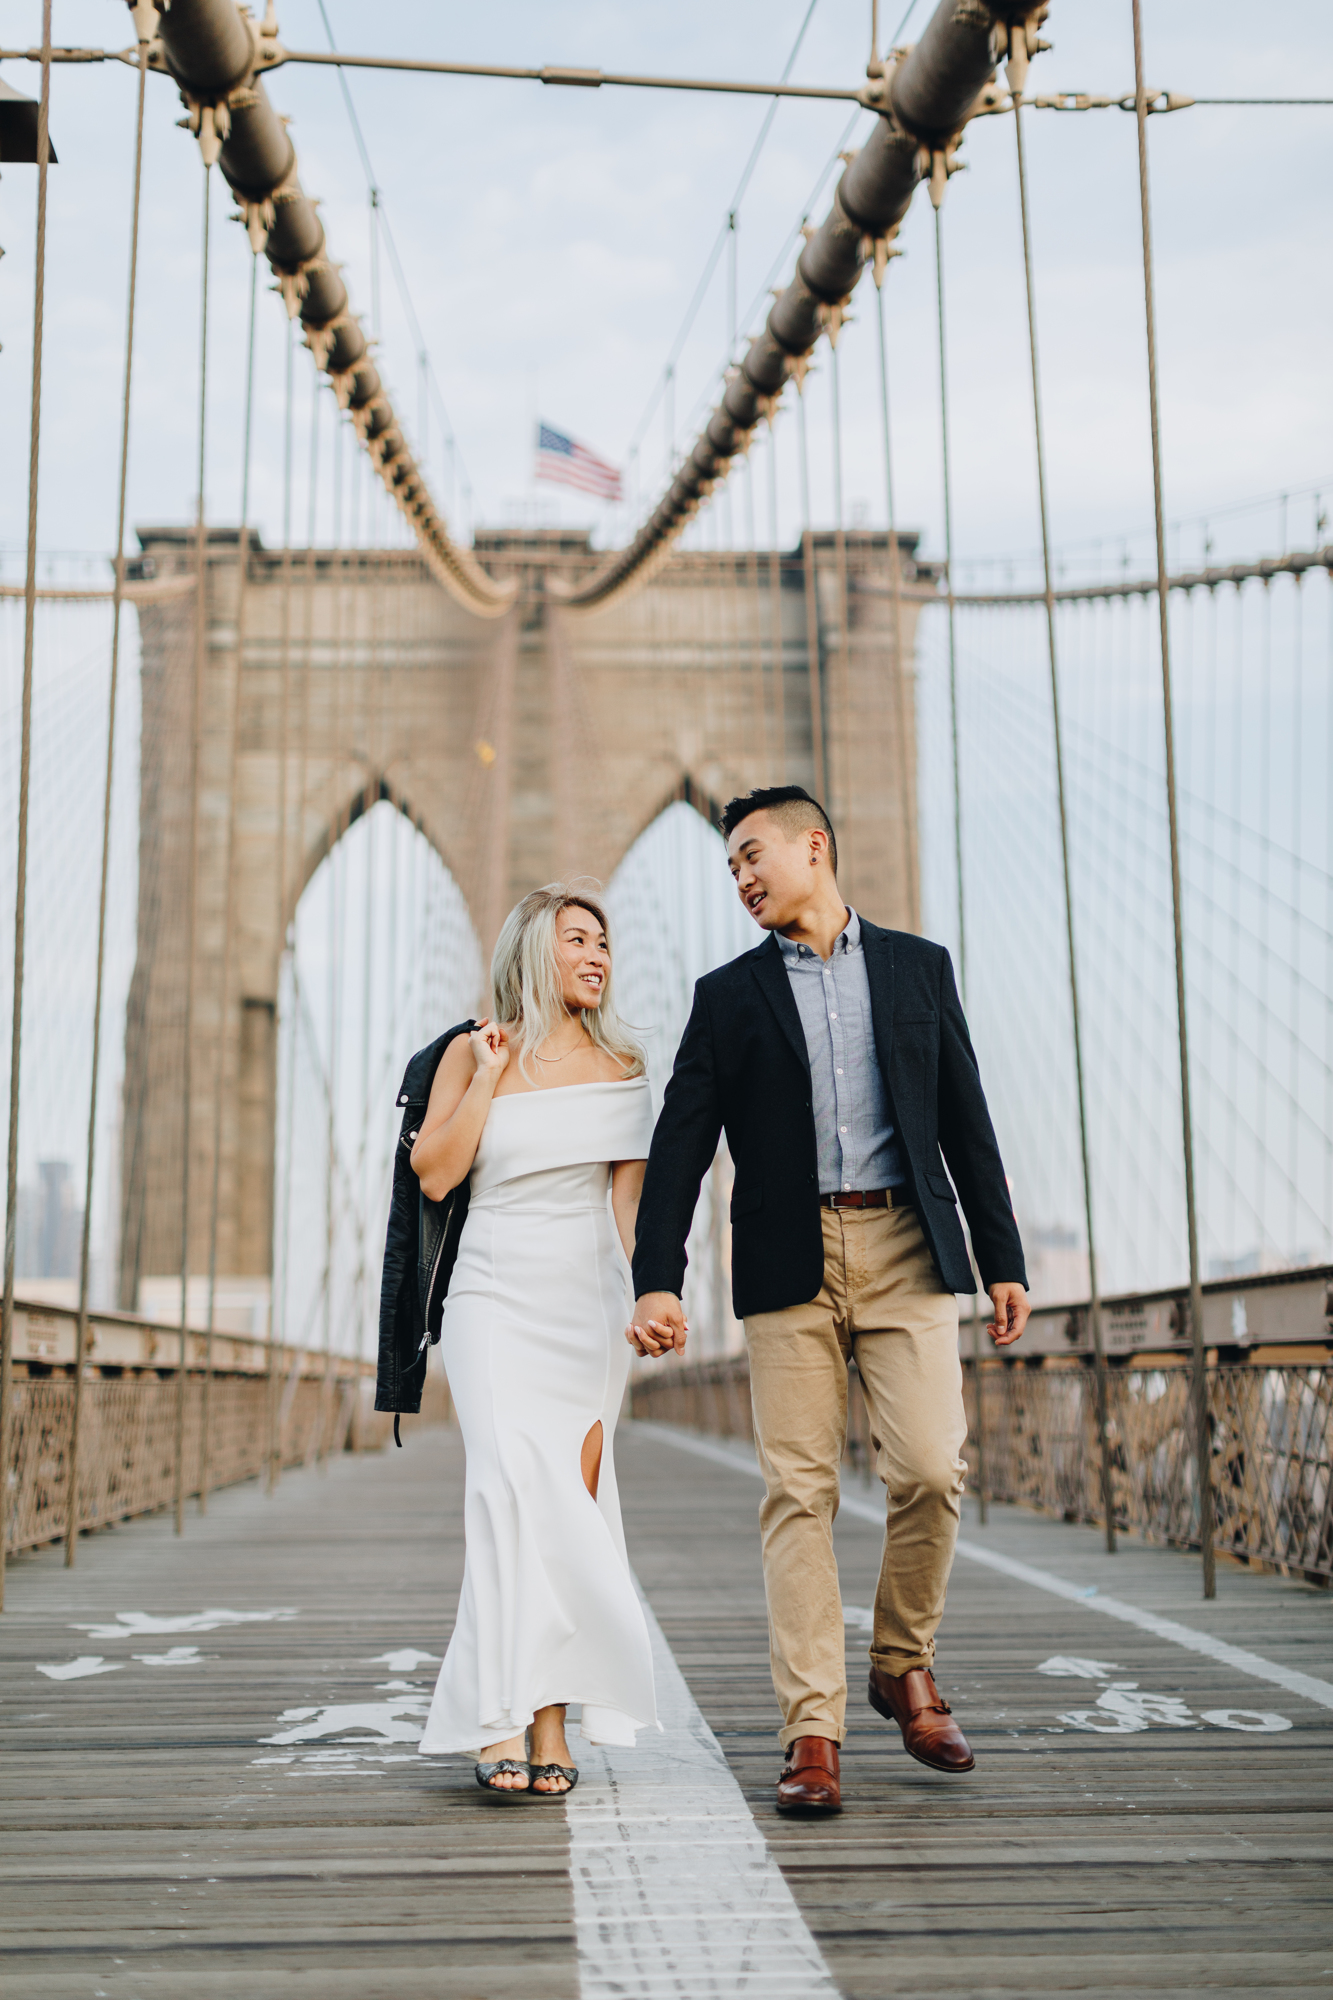 Pretty New York Engagement Photos on the Brooklyn Bridge